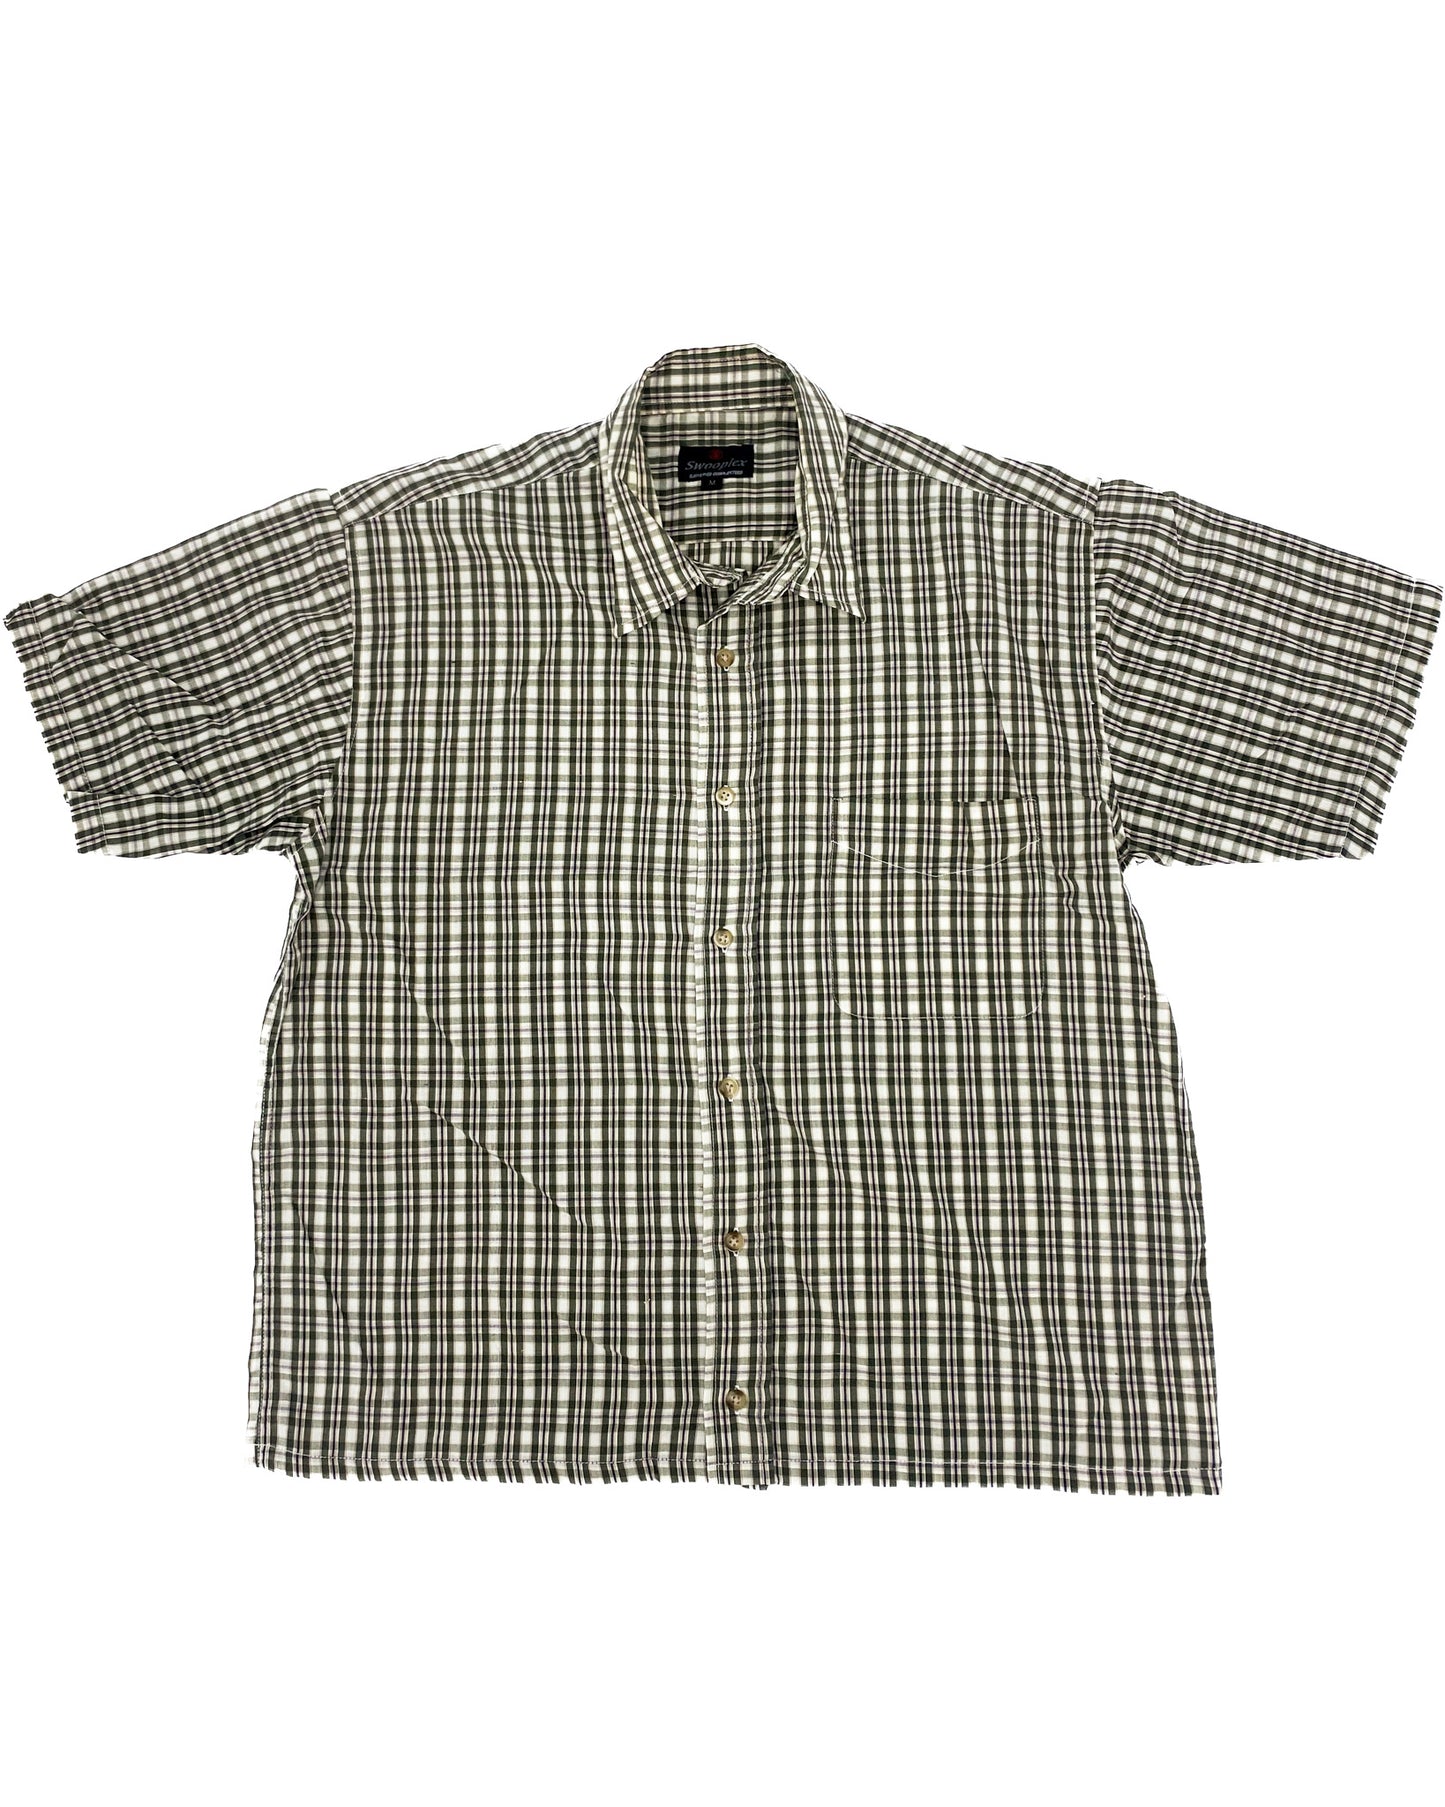 Vintage Green/White Checkered Shirt - M